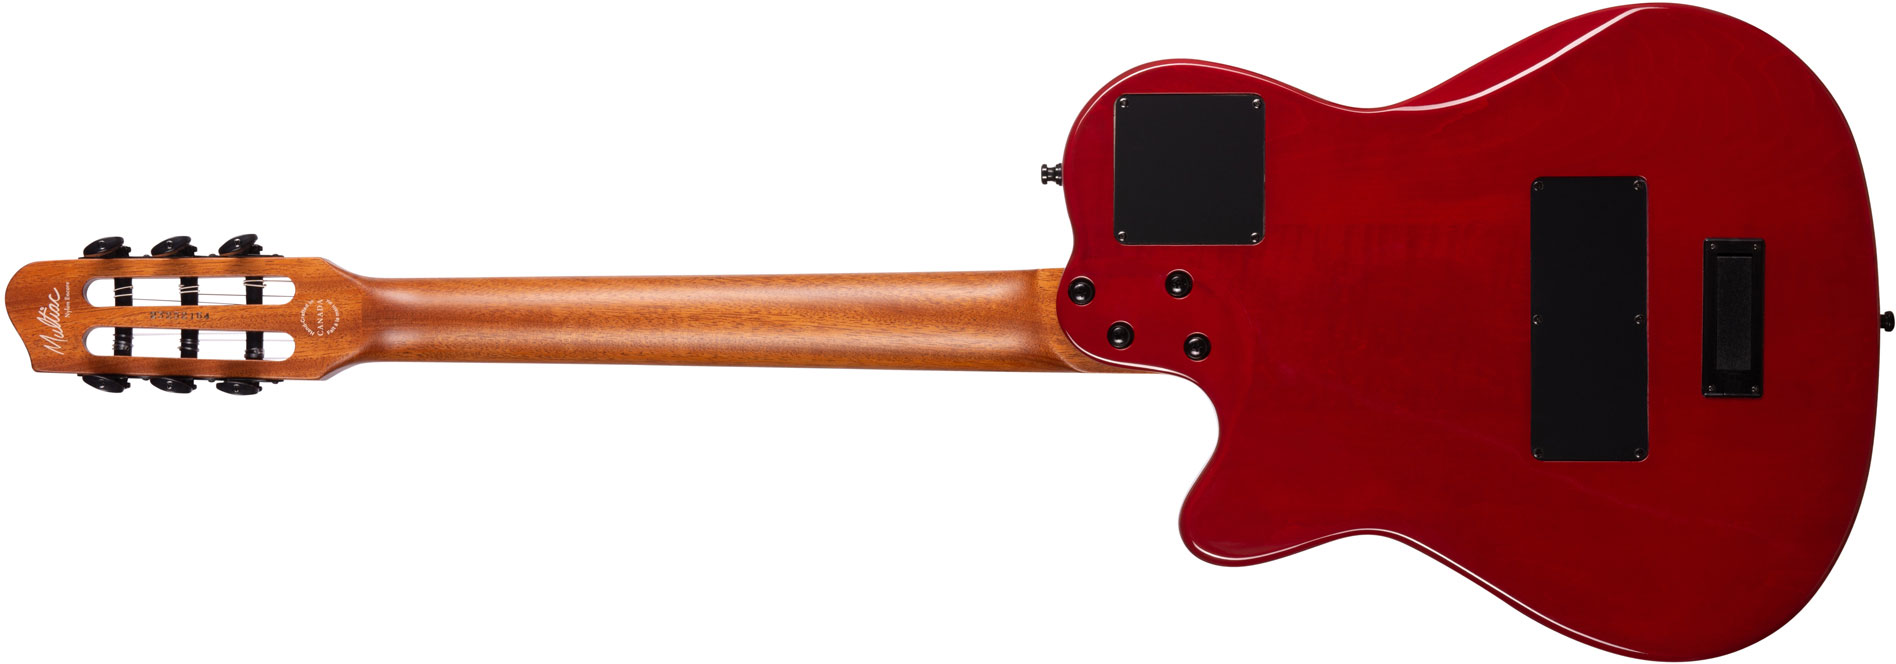 Godin Multiac Nylon Mundial Cw Cedre Acajou Rw - Aztec Red - Guitare Acoustique - Variation 1